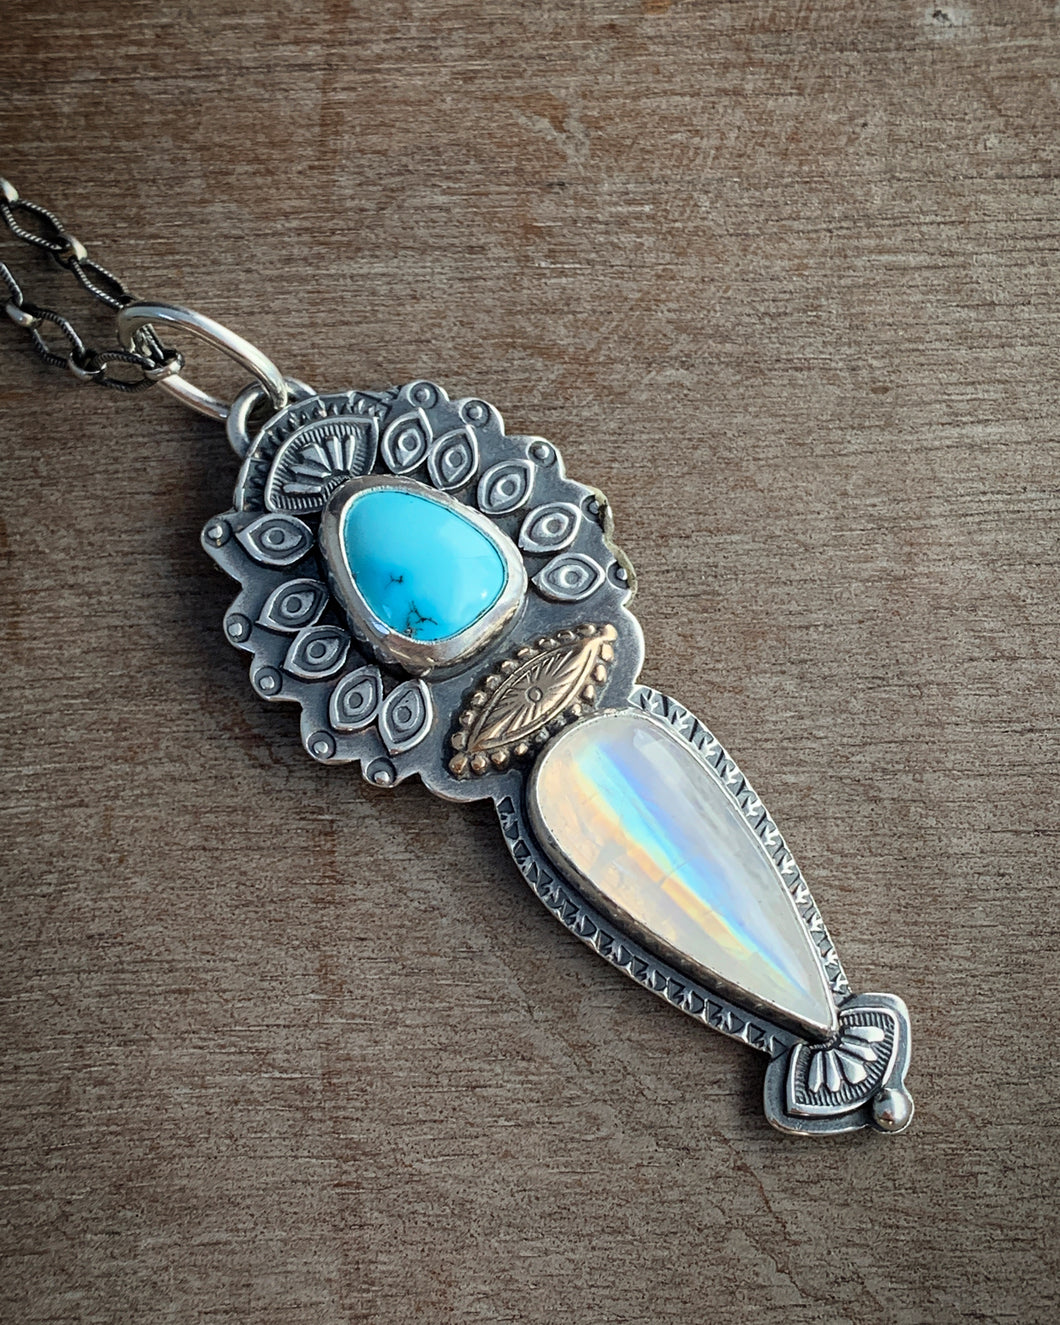 Egyptian turquoise and rainbow moonstone pendant